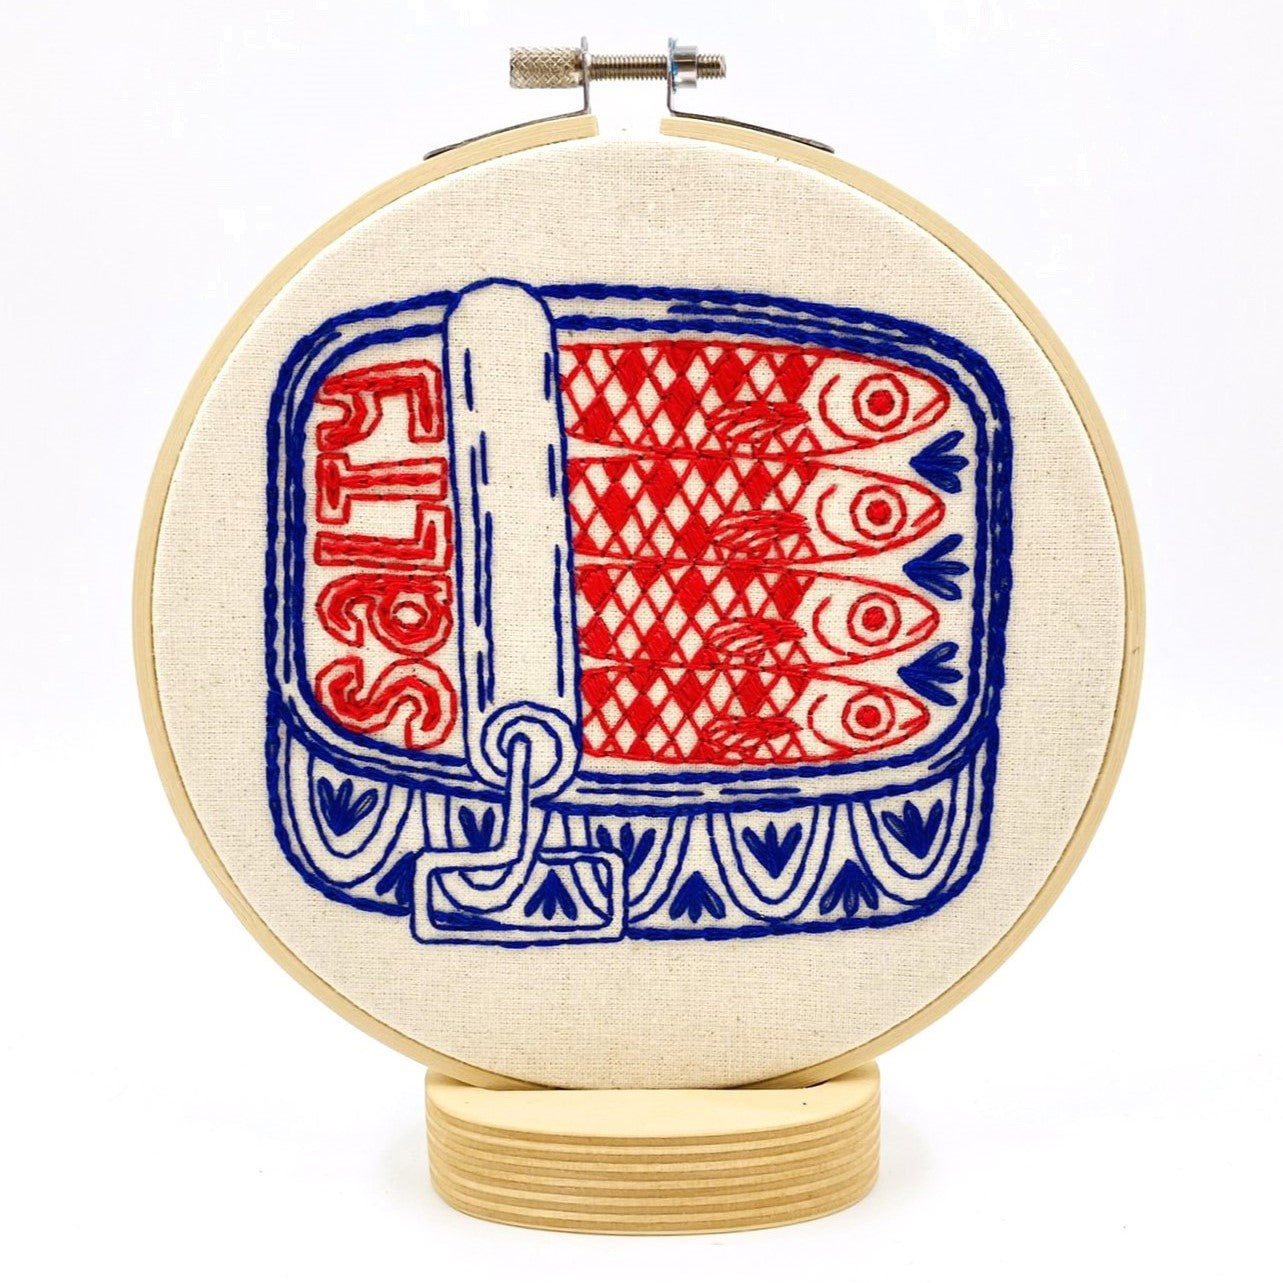 Nautical – Hook, Line & Tinker - modern embroidery kits